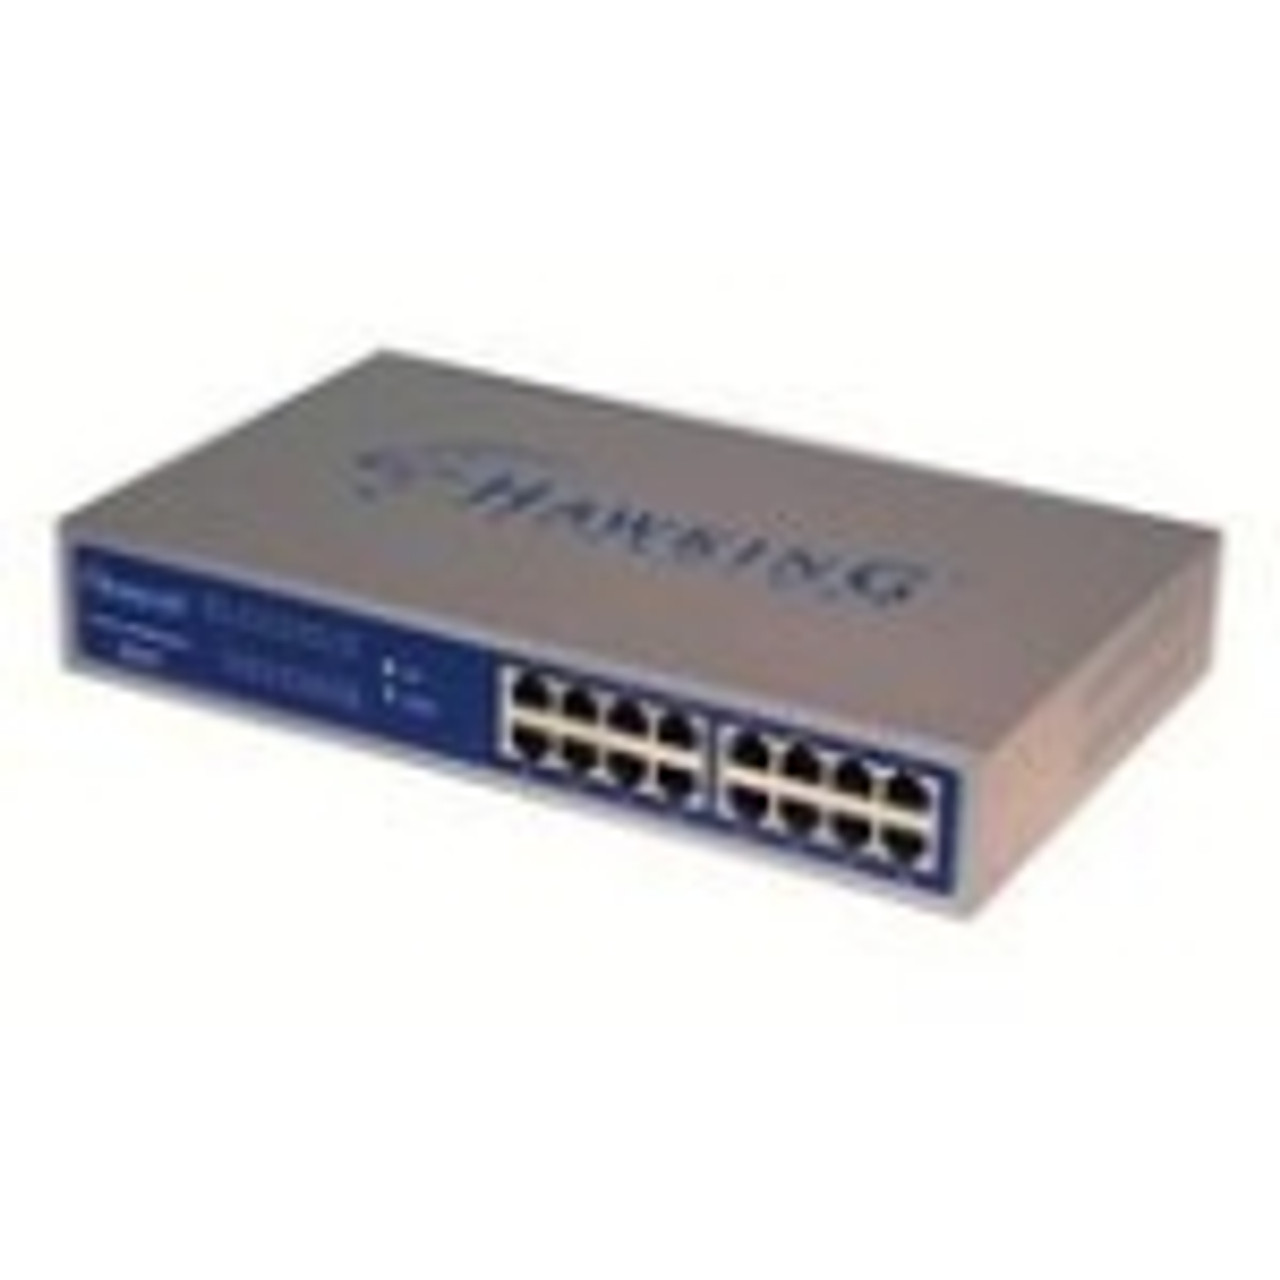 HFS16T Hawking Ethernet Switch 16 x 10/100Base-TX (Refurbished)